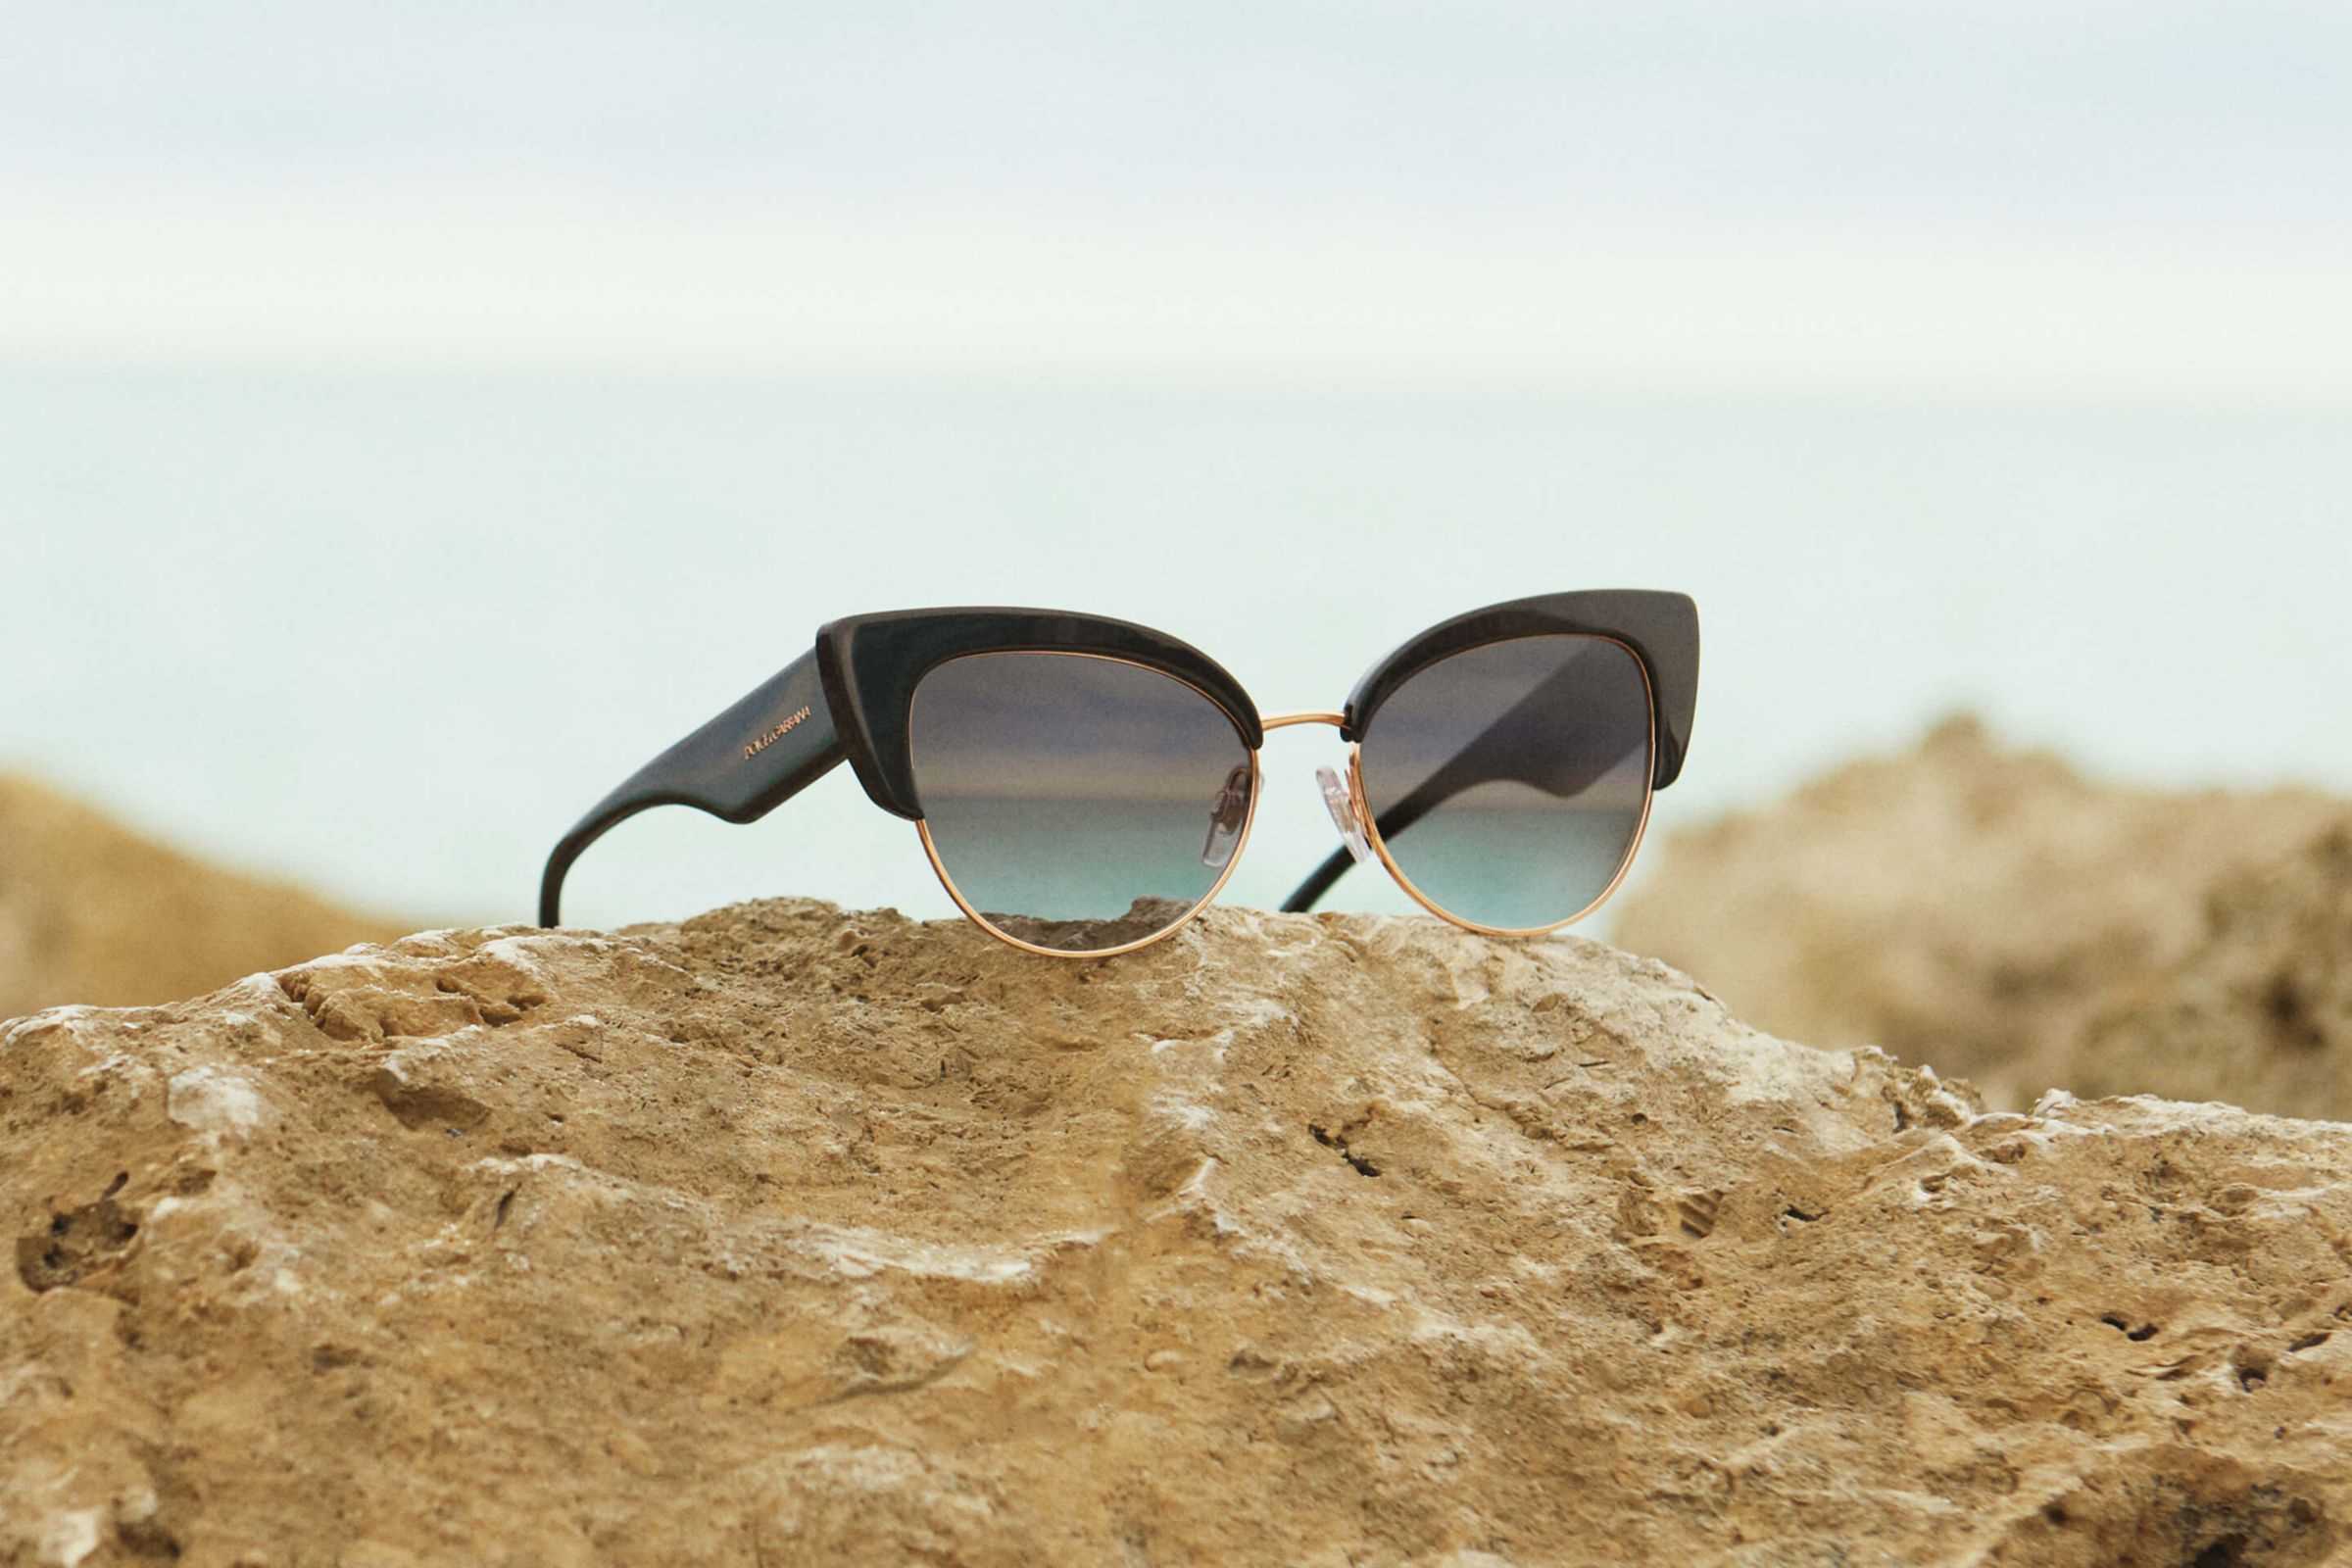 By The Coast: Dolce & Gabbana sunglasses